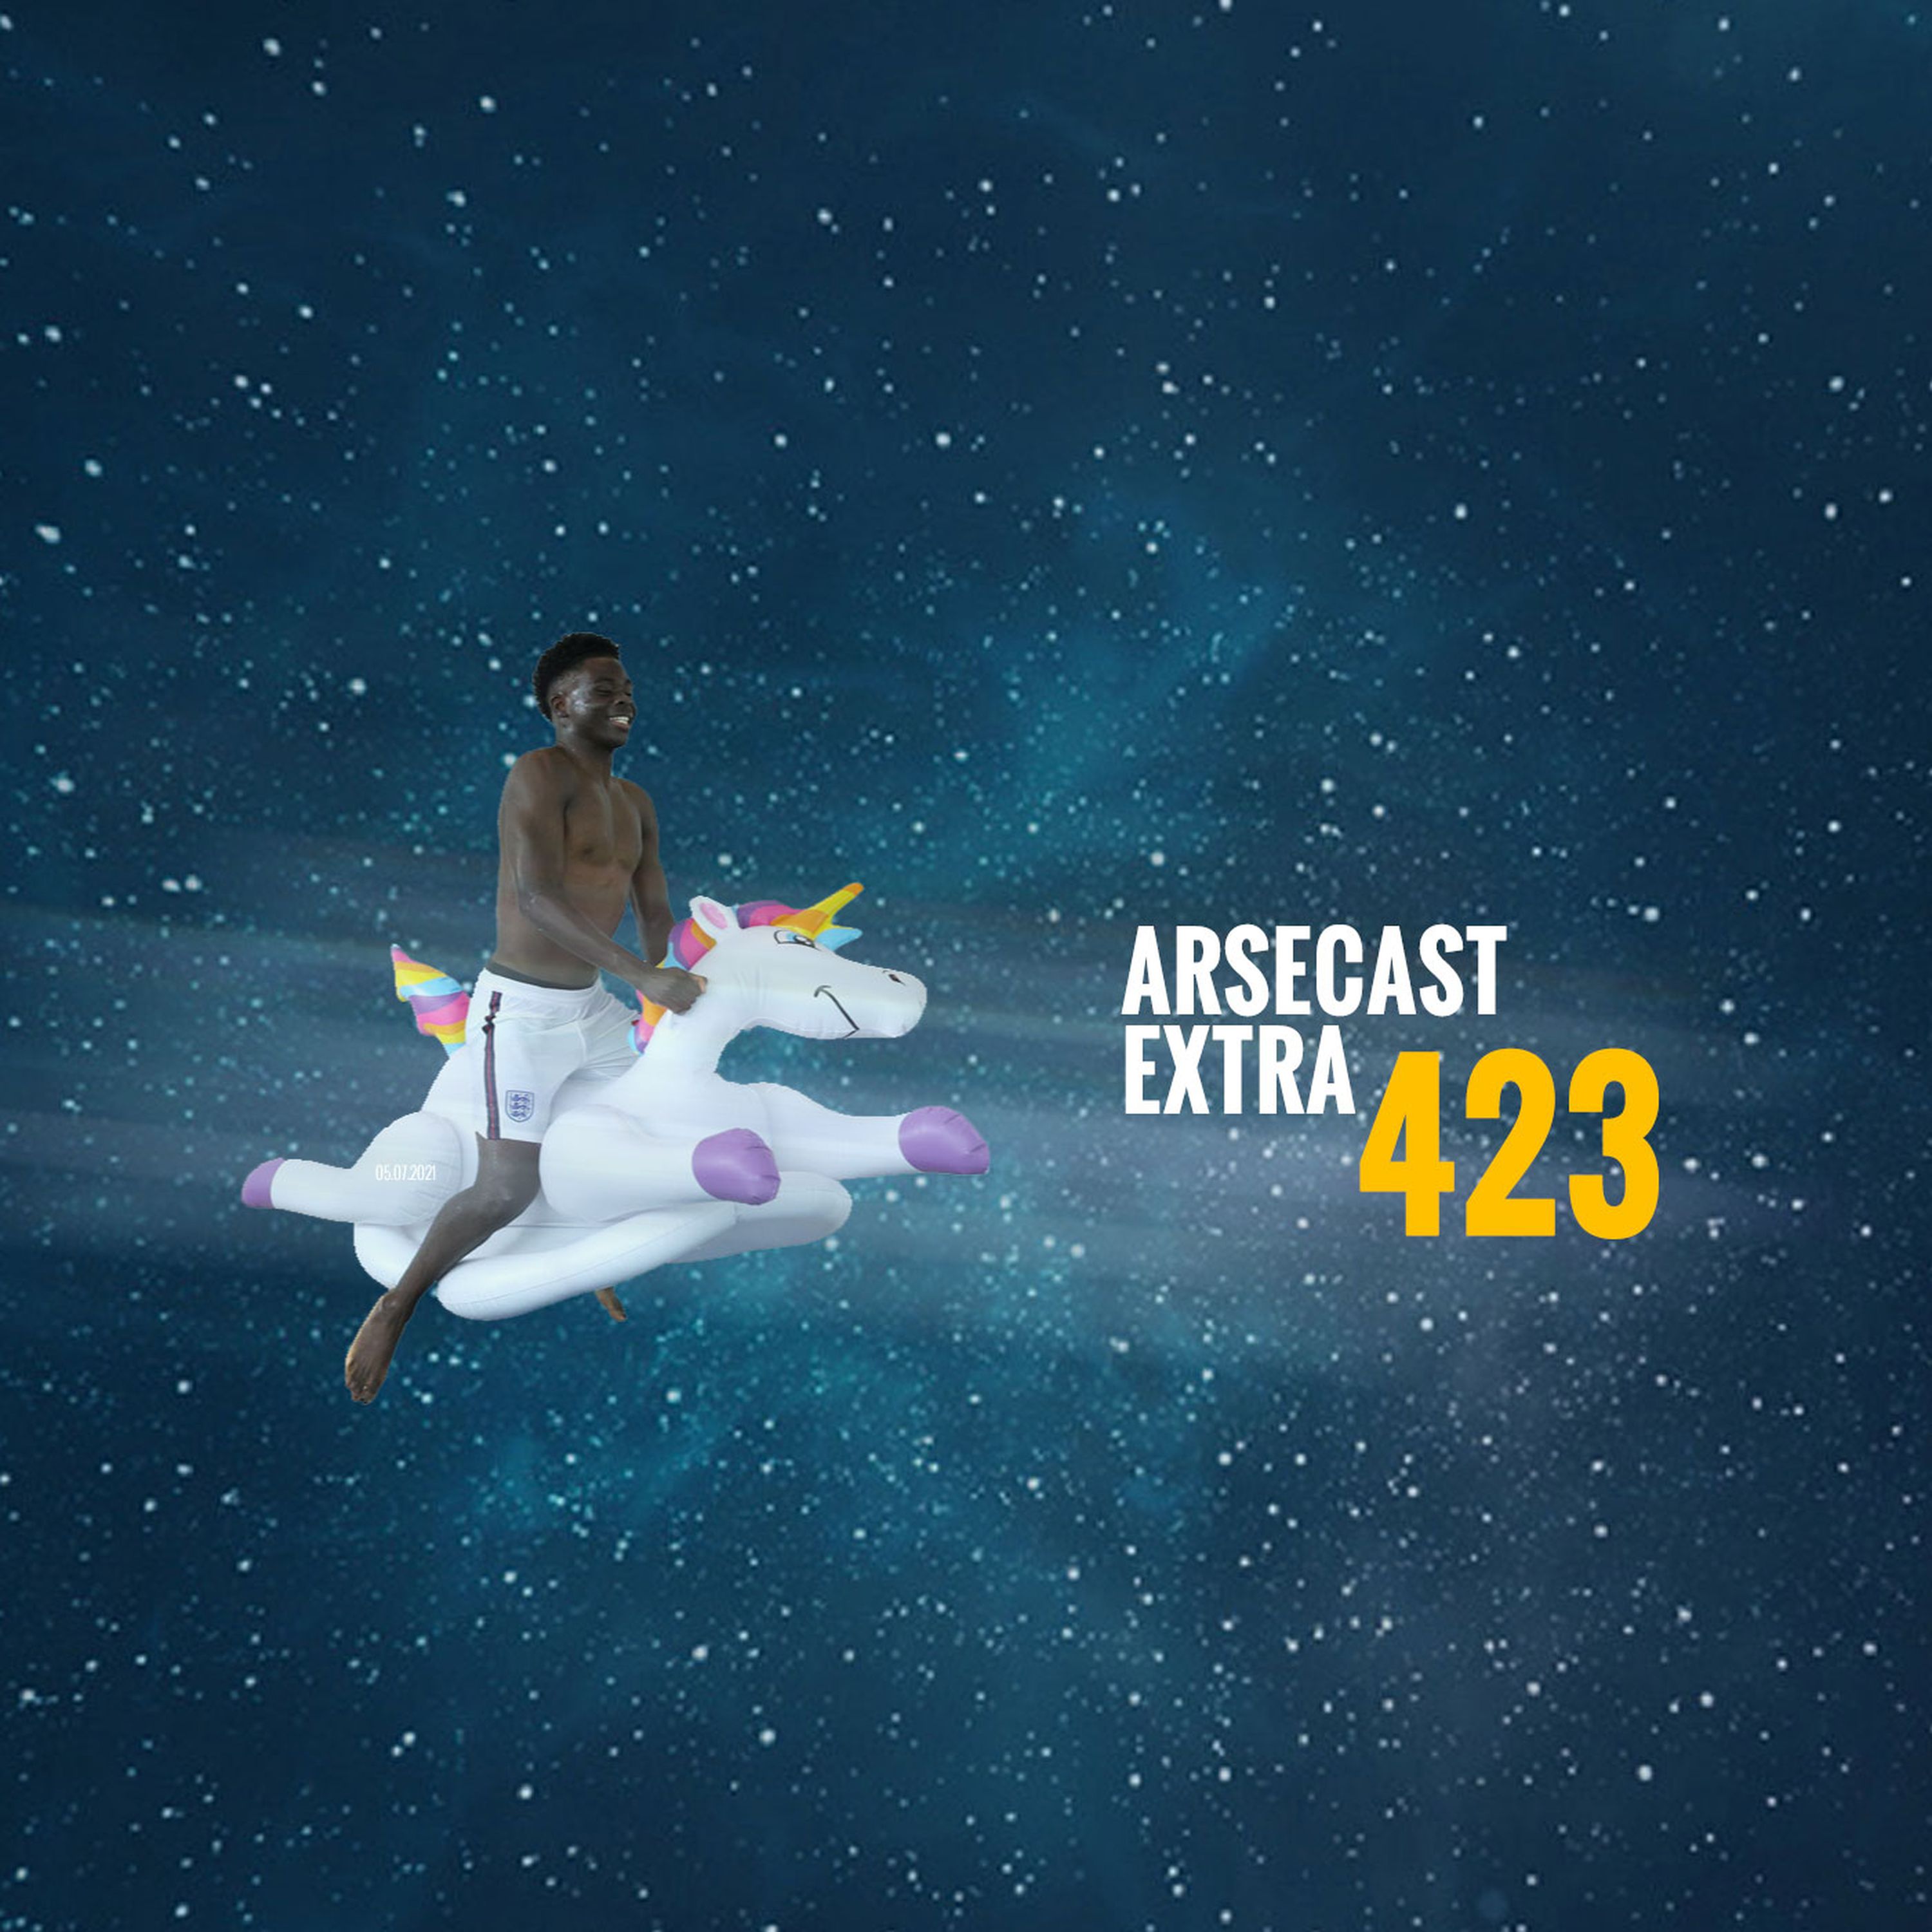 Arsecast Extra Episode 423 - 05.07.2021